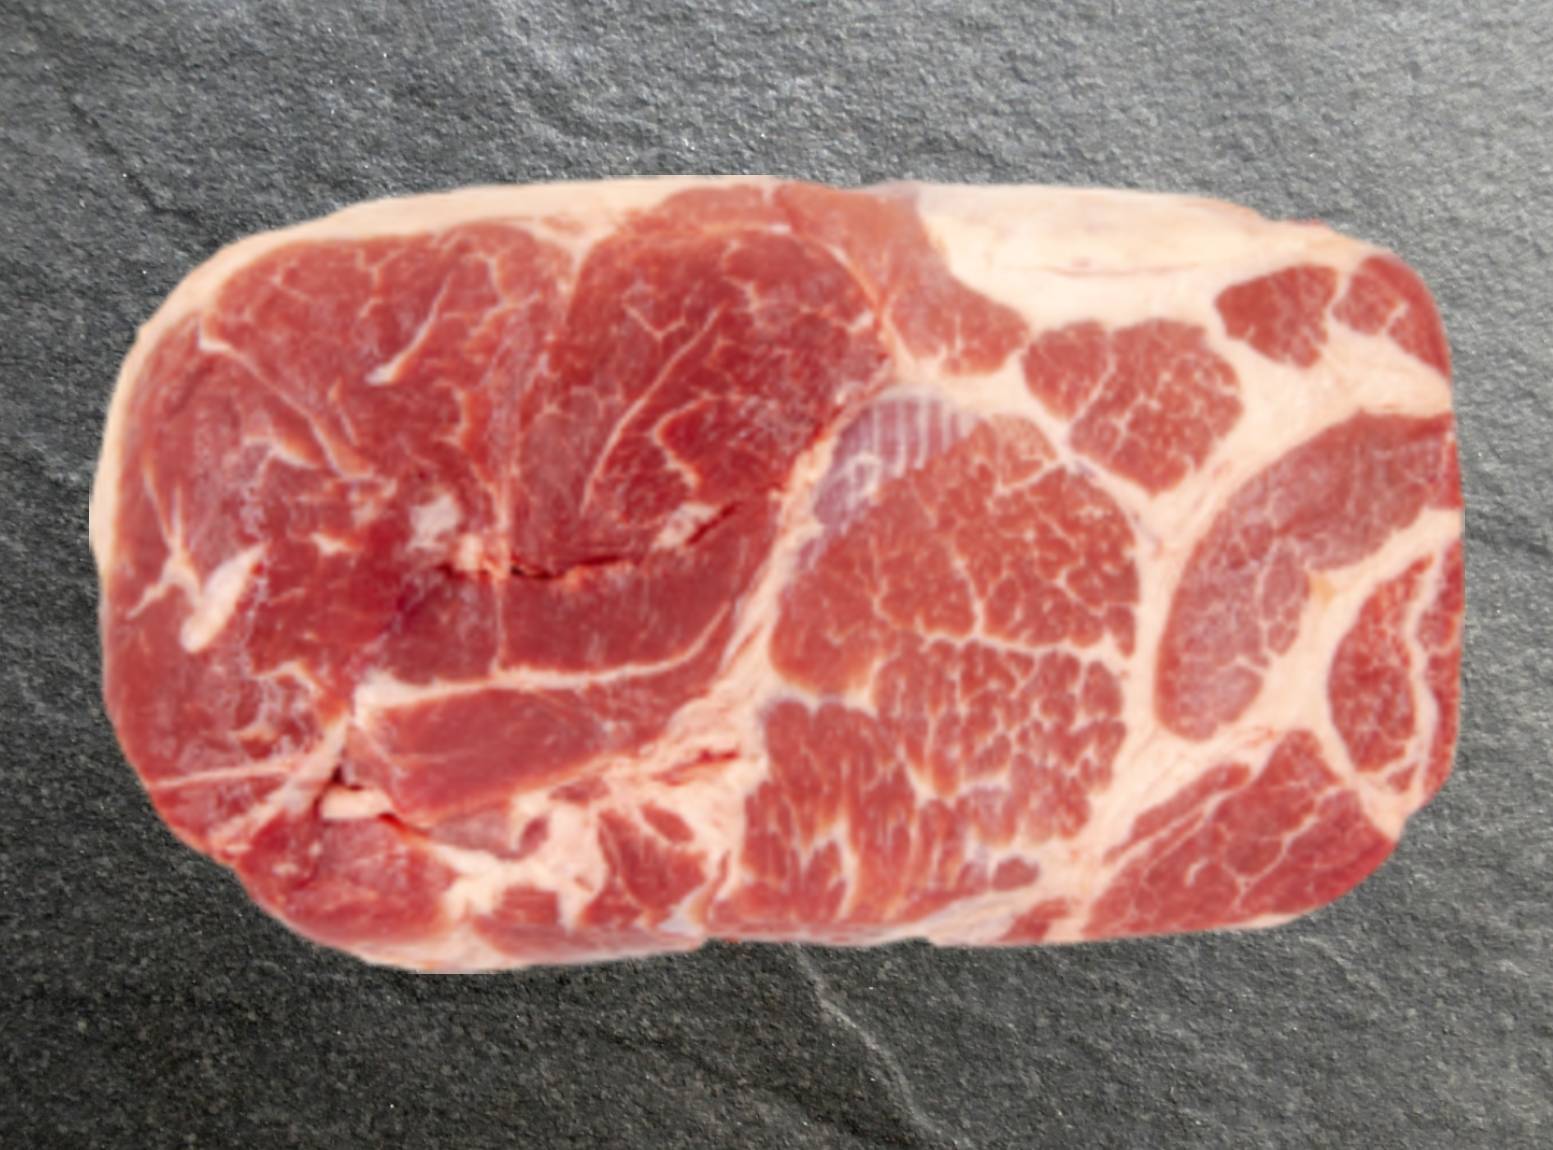 100% Naturuel High Quality Duroc meat Teruel Frozen Pork